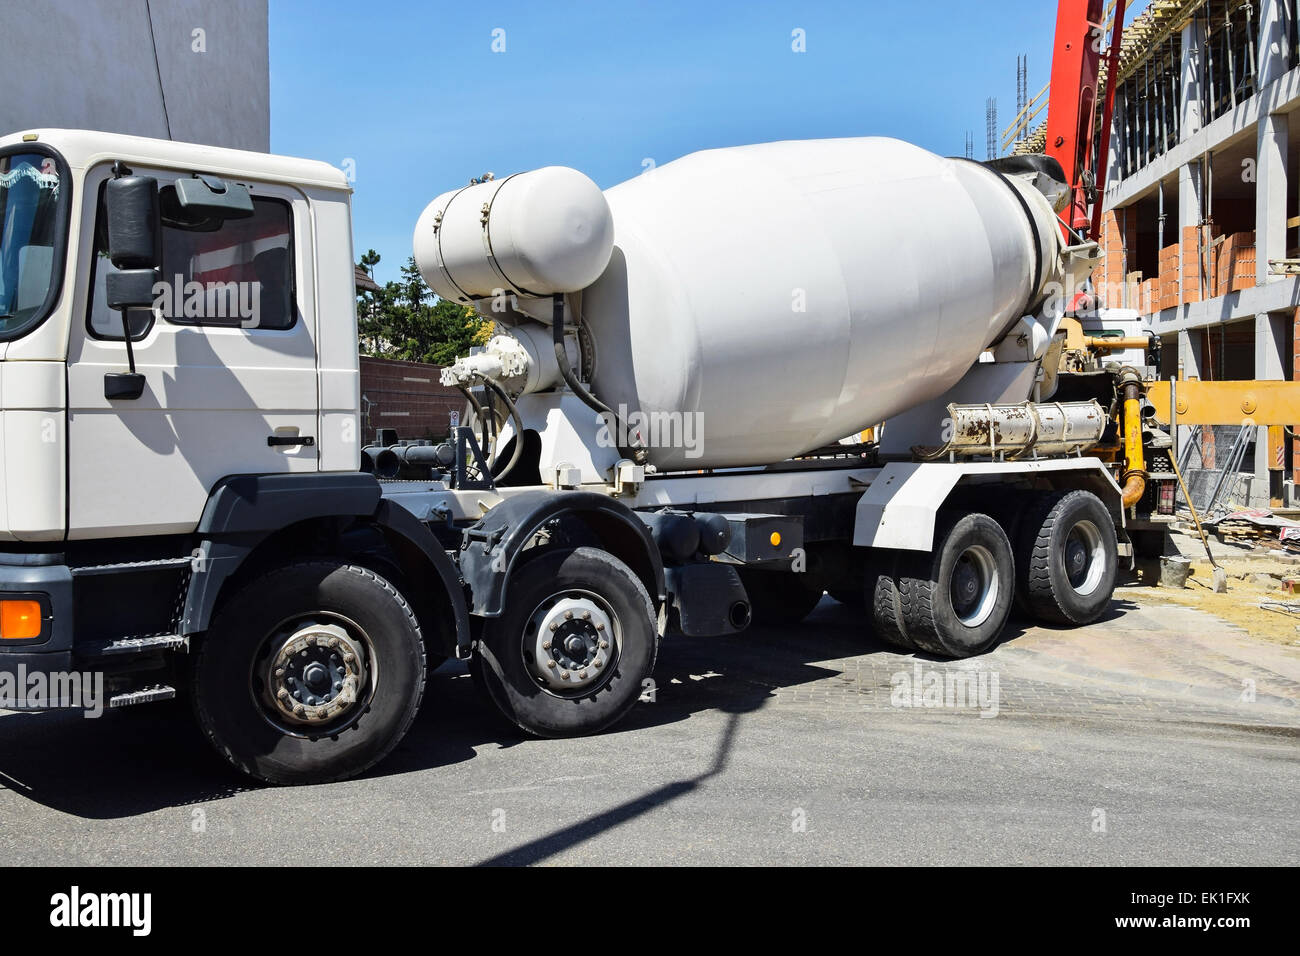 https://c8.alamy.com/comp/EK1FXK/cement-mixer-truck-at-the-construction-site-EK1FXK.jpg